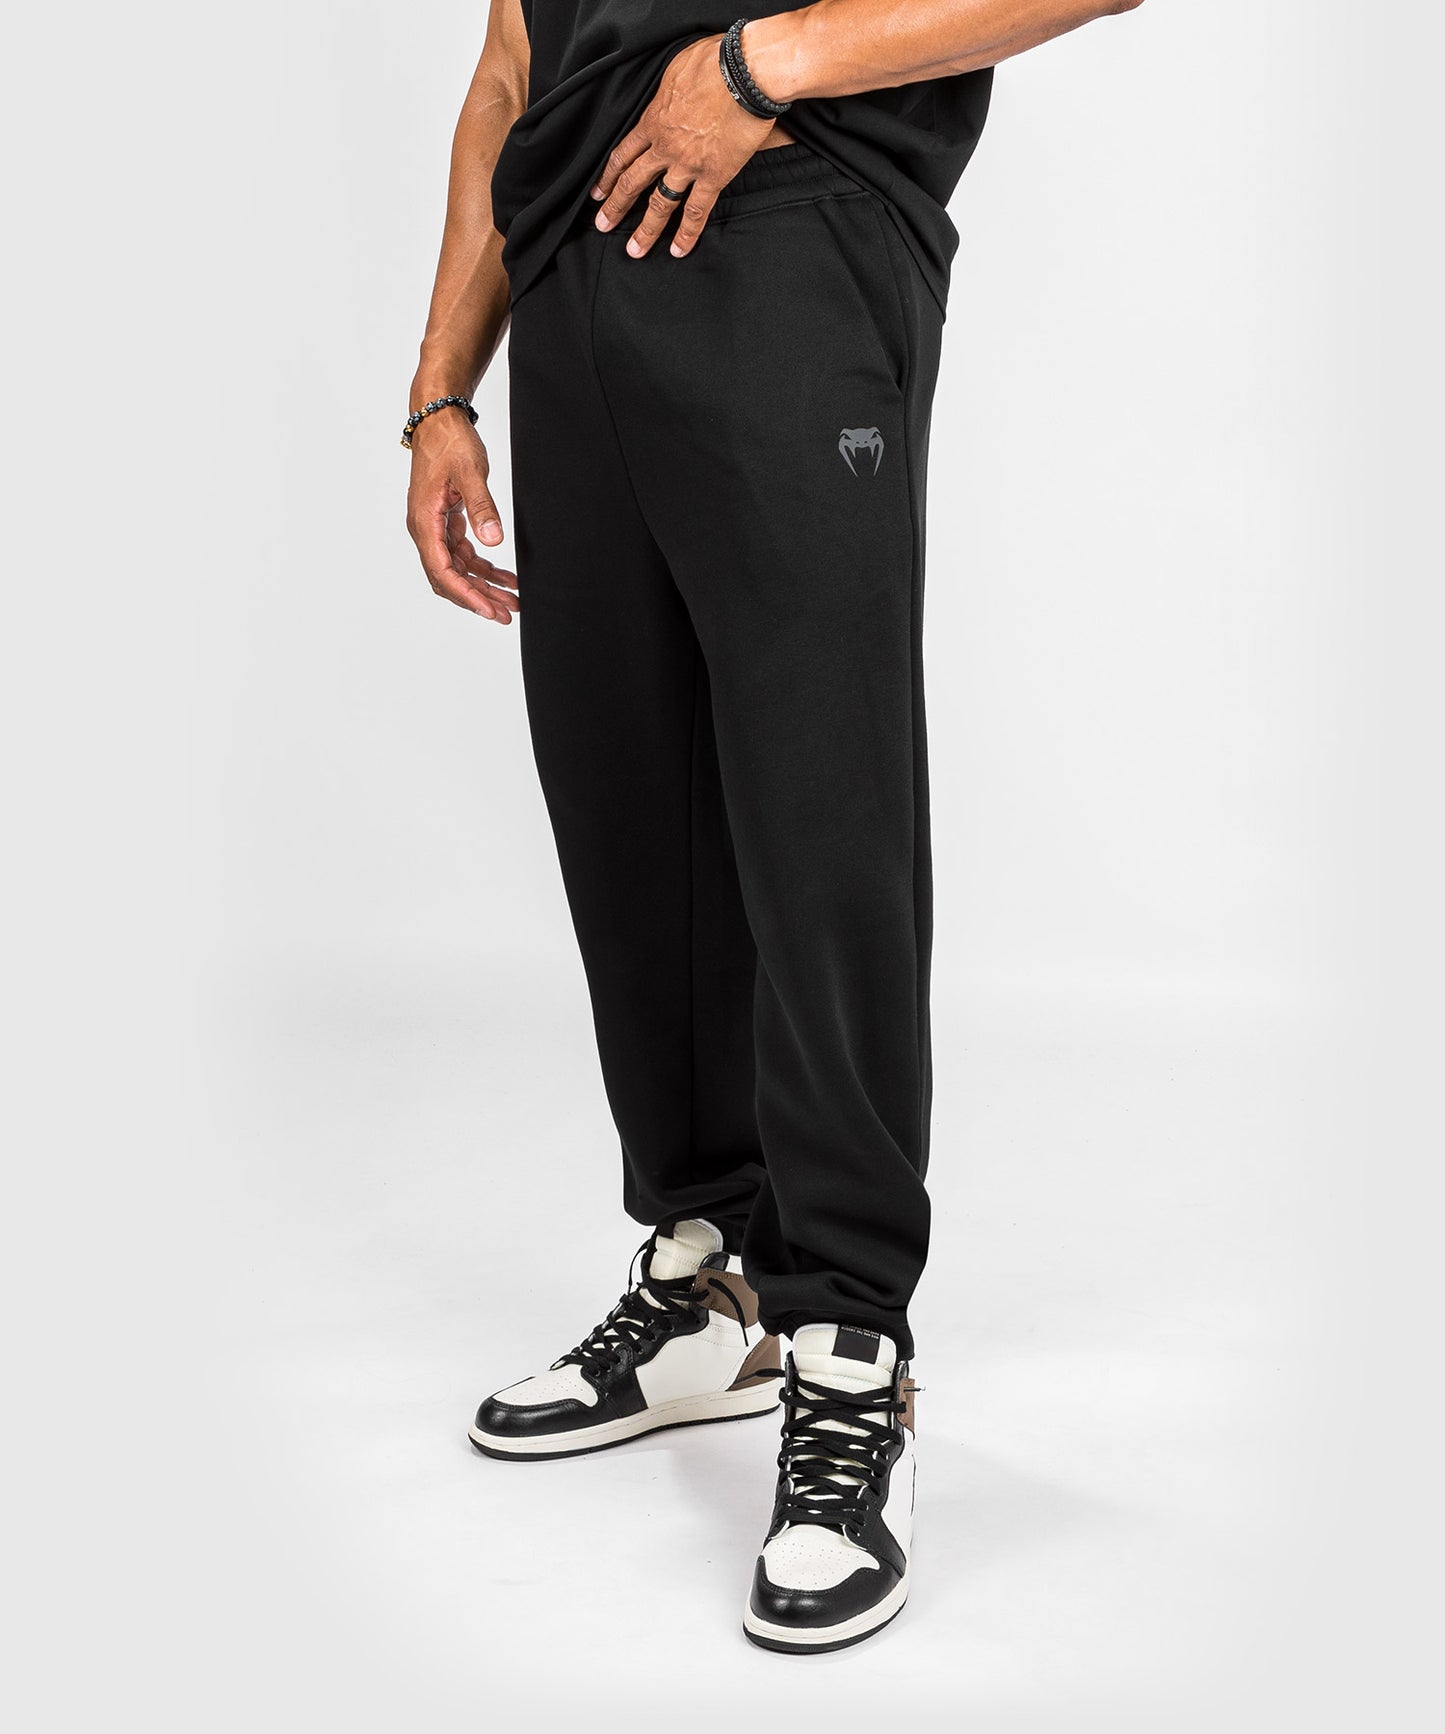  Venum Men's Standard Joggers Vortex XL, Black : Clothing, Shoes  & Jewelry